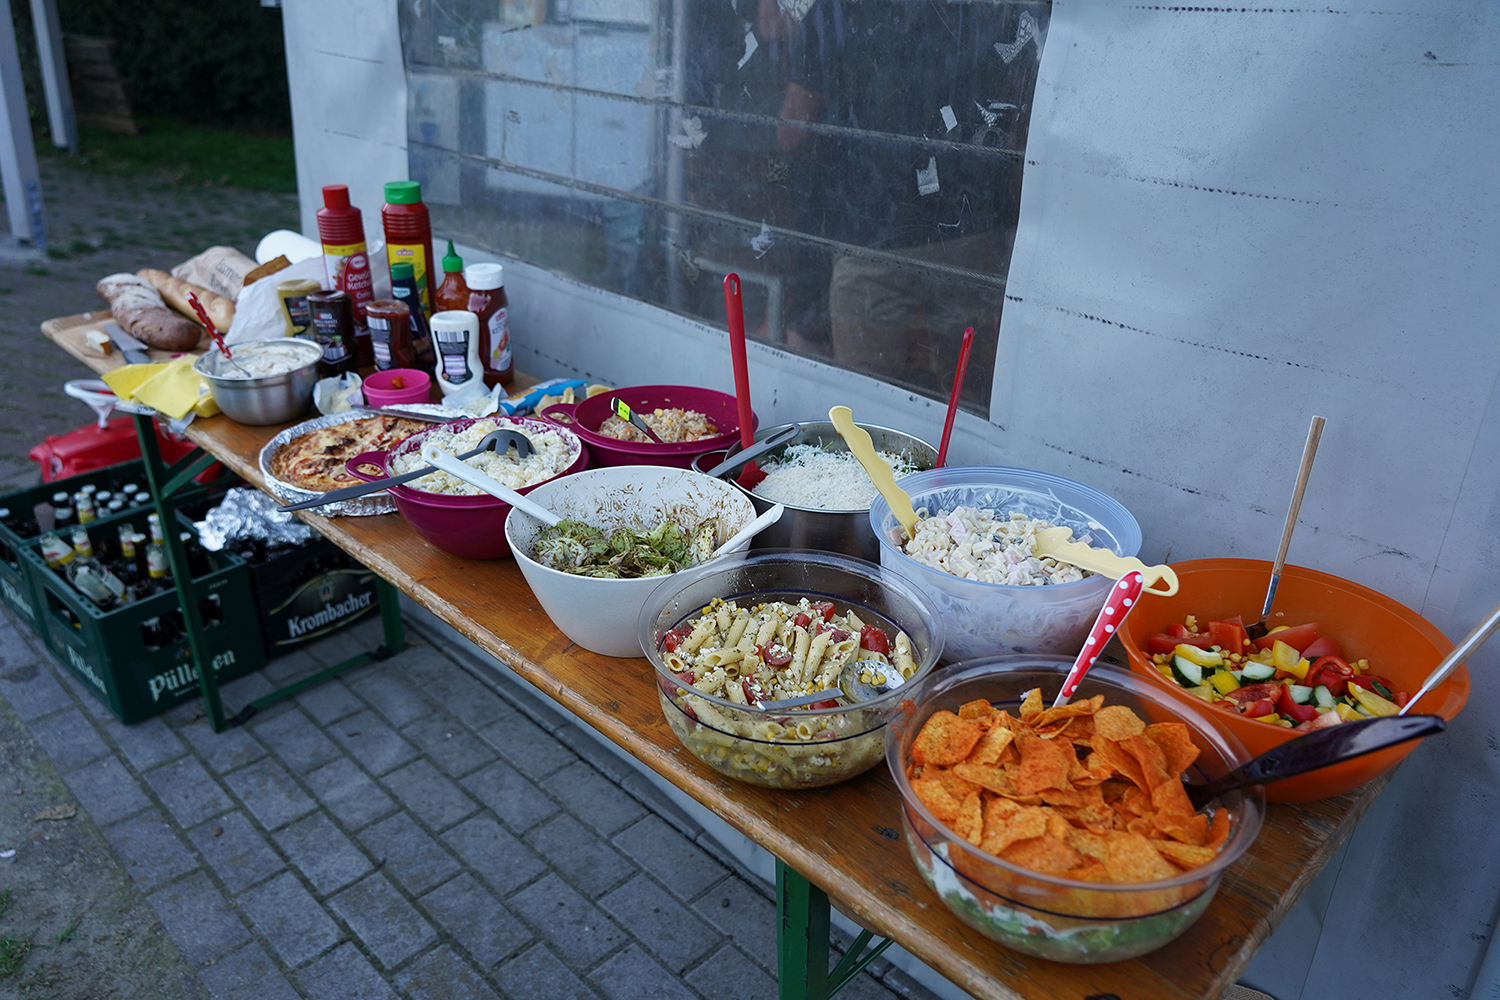 Campingwochenende in Lengerich: Salatbuffet